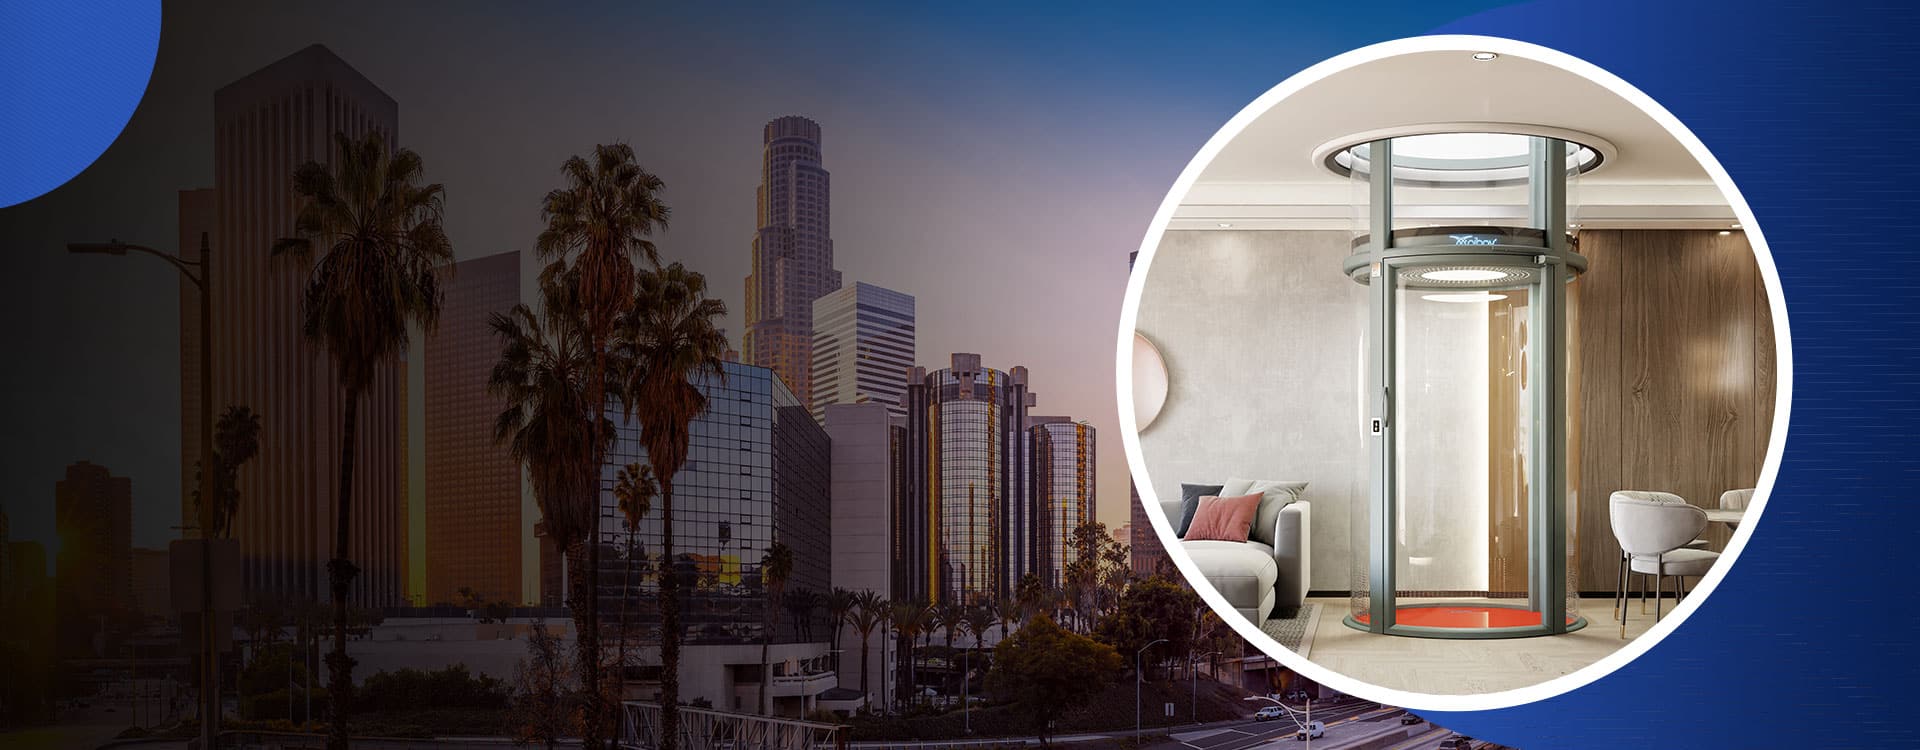 Domestic Lifts in Los Angeles - Nibav Lifts USA